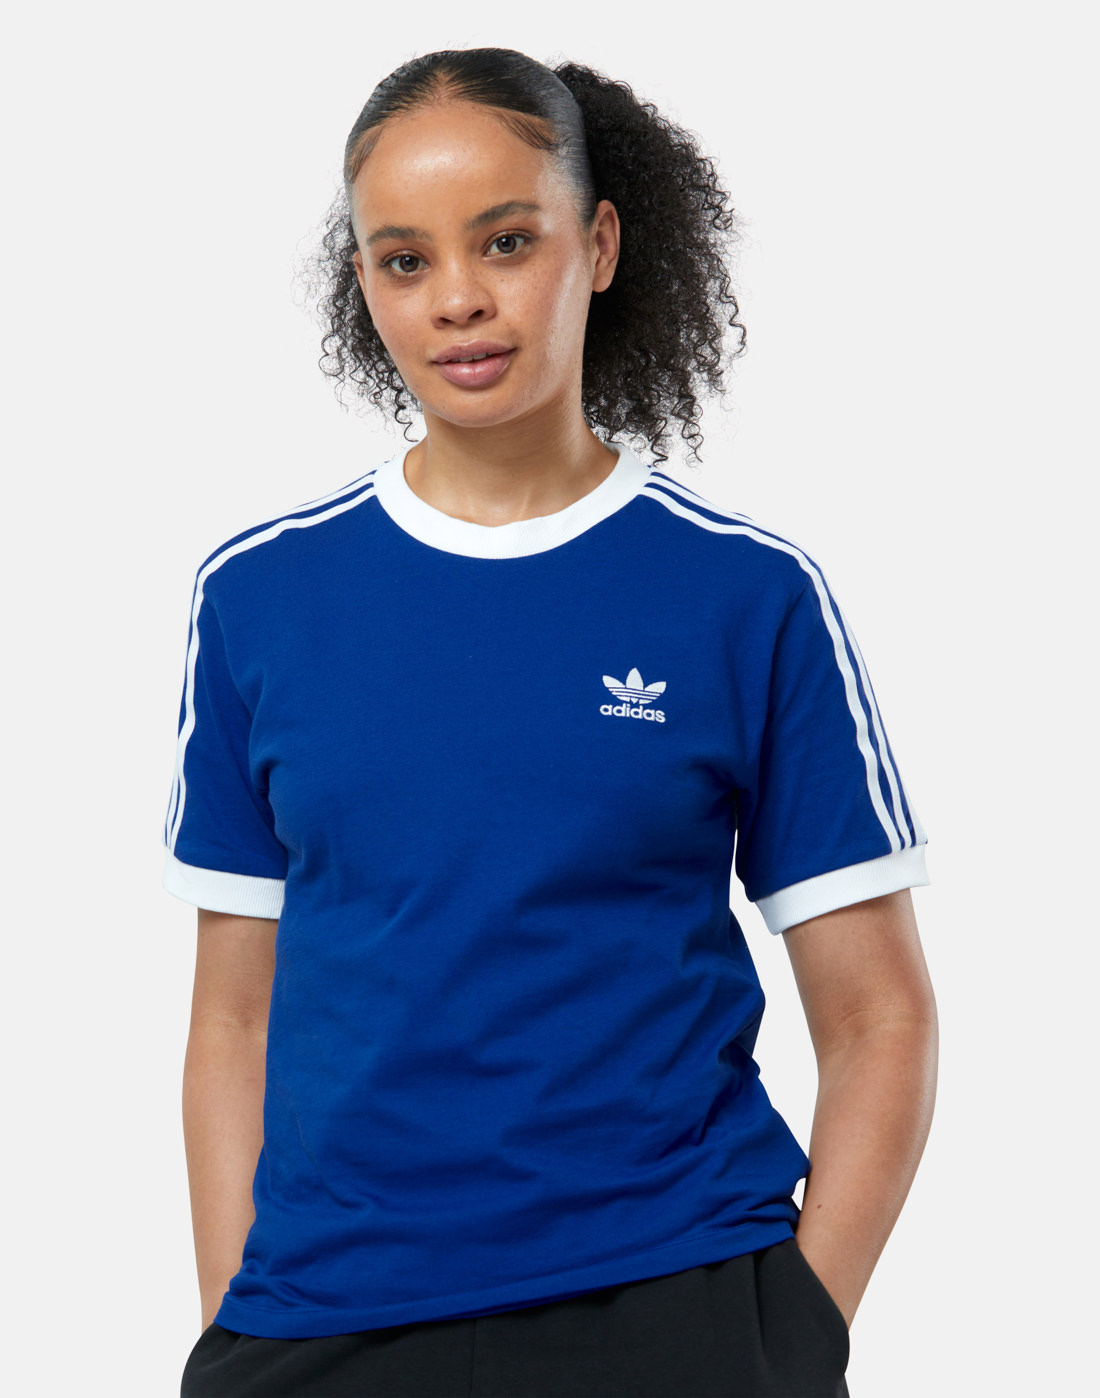 adidas Originals Womens 3 Stripes T-shirt - Blue | Life Style Sports UK